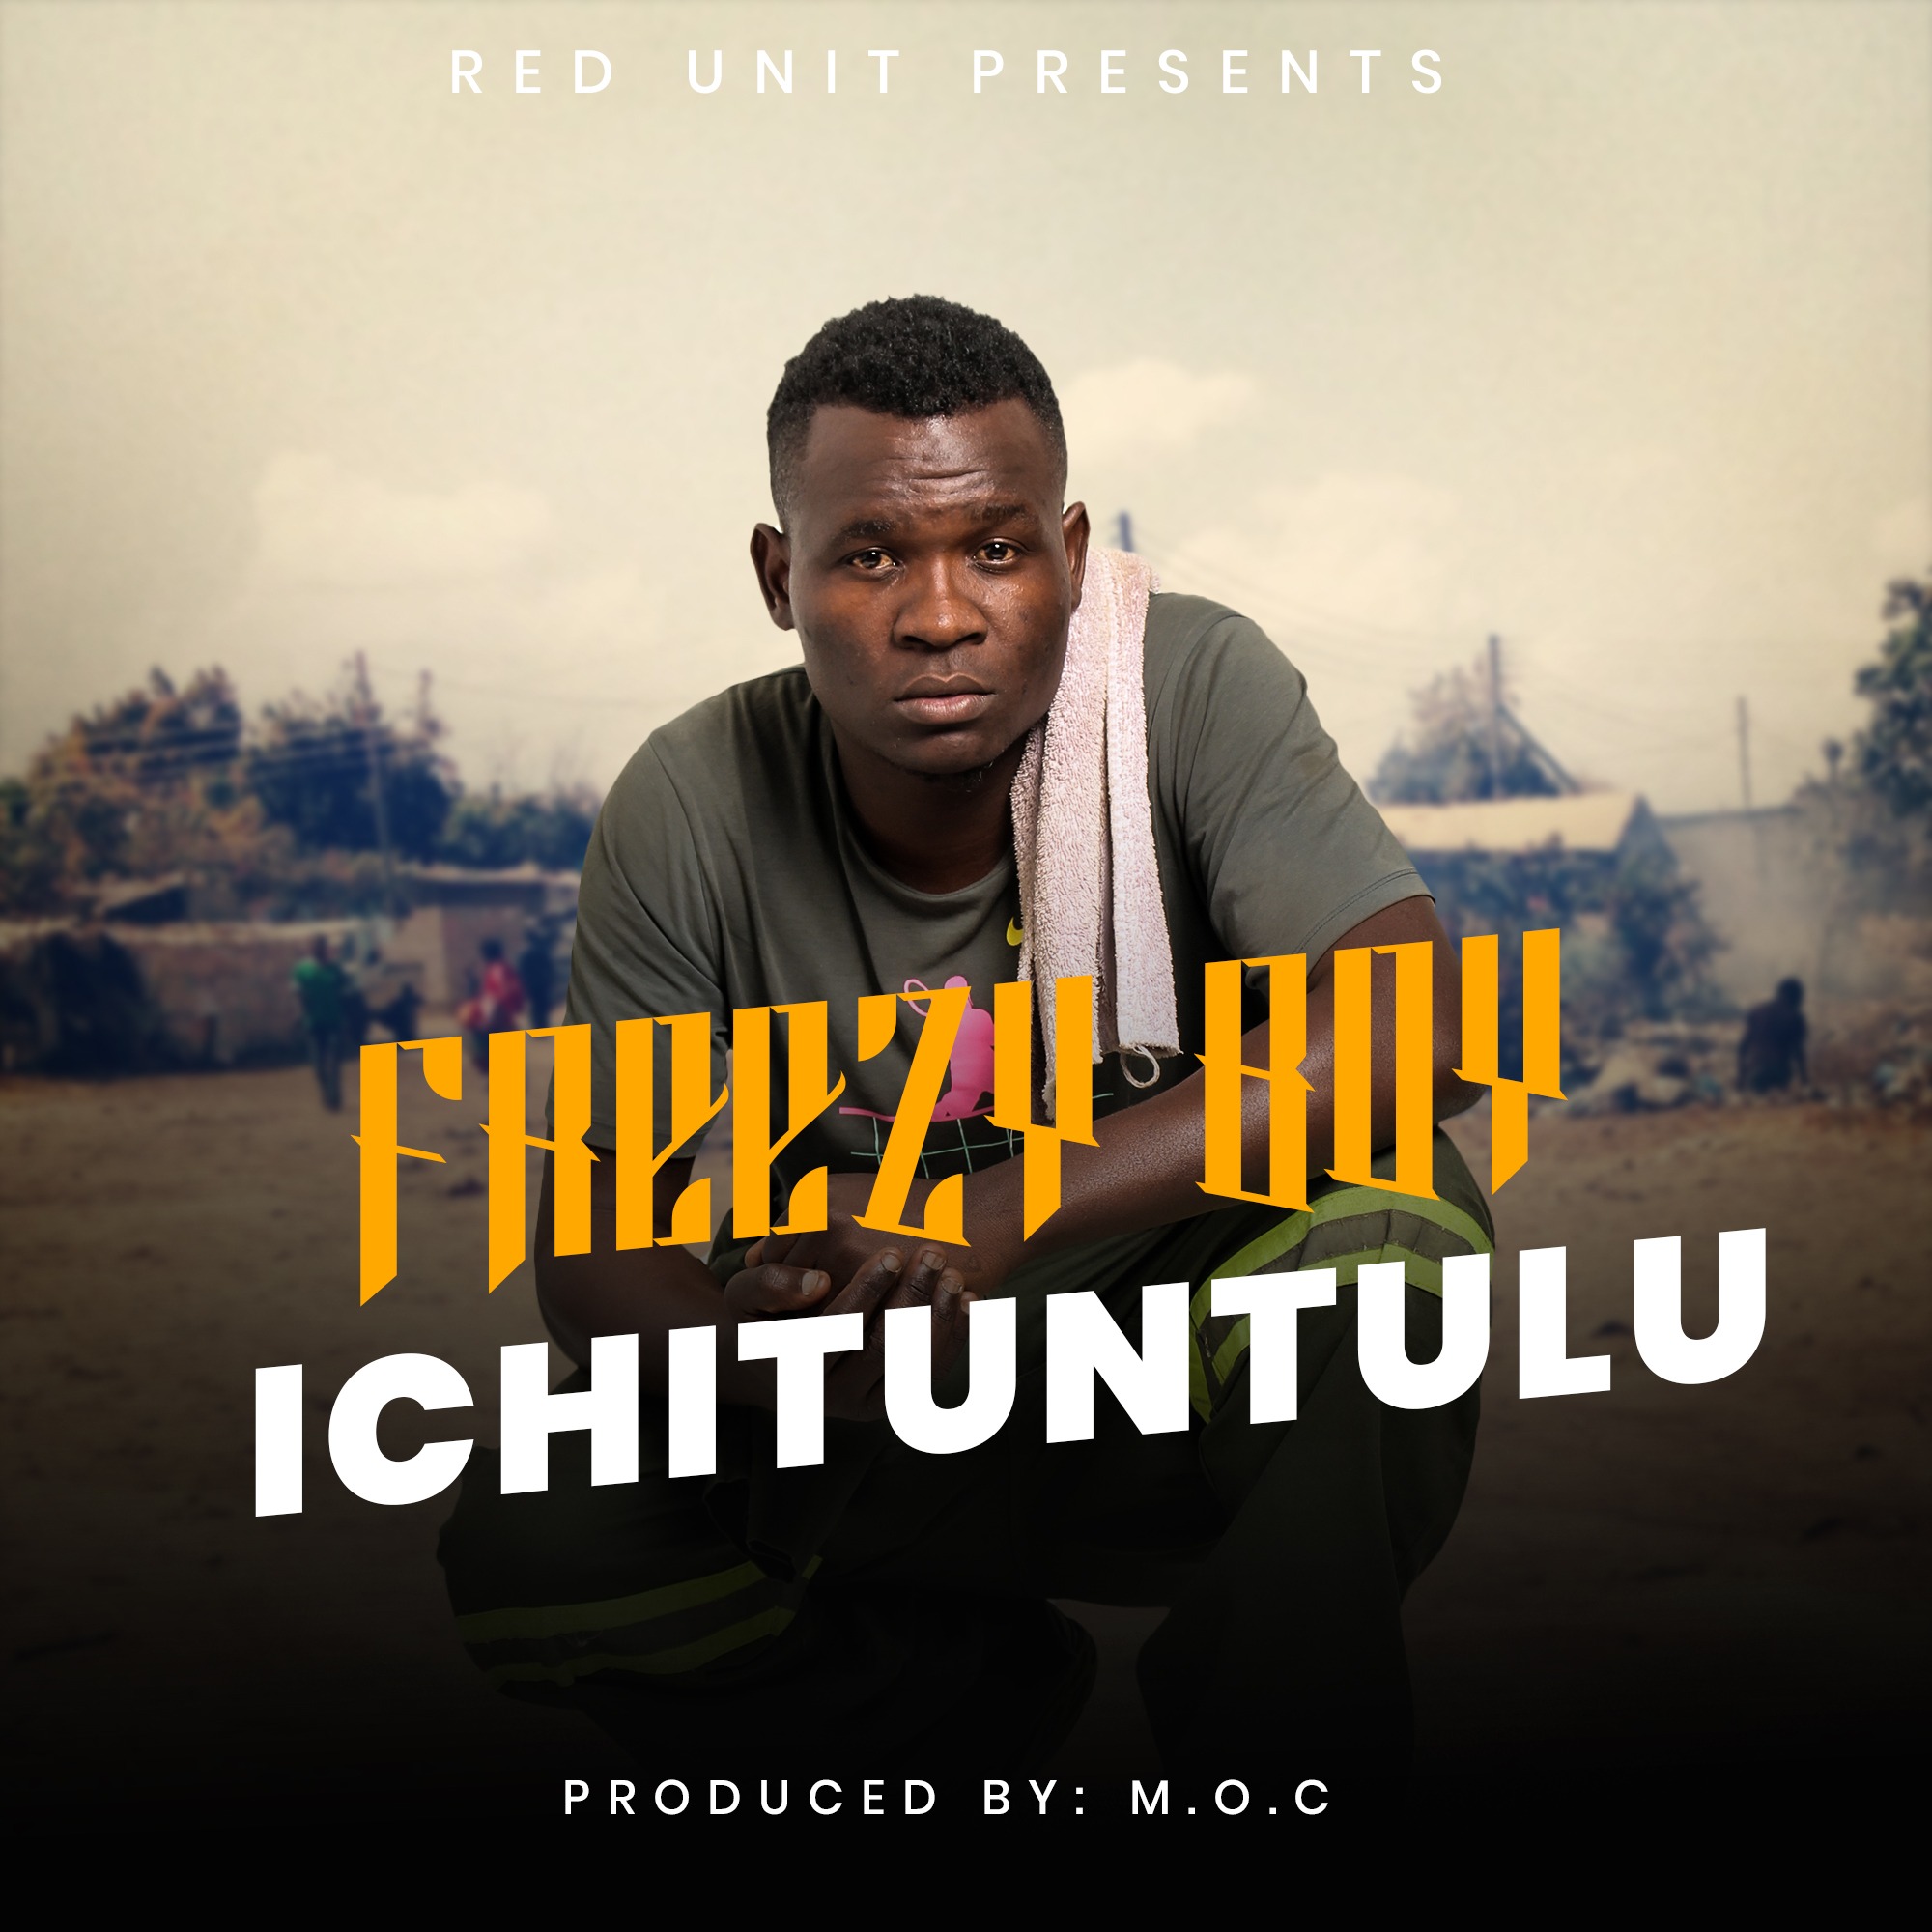 Freezy Boy - Ichituntulu (Pro by M.O.C)